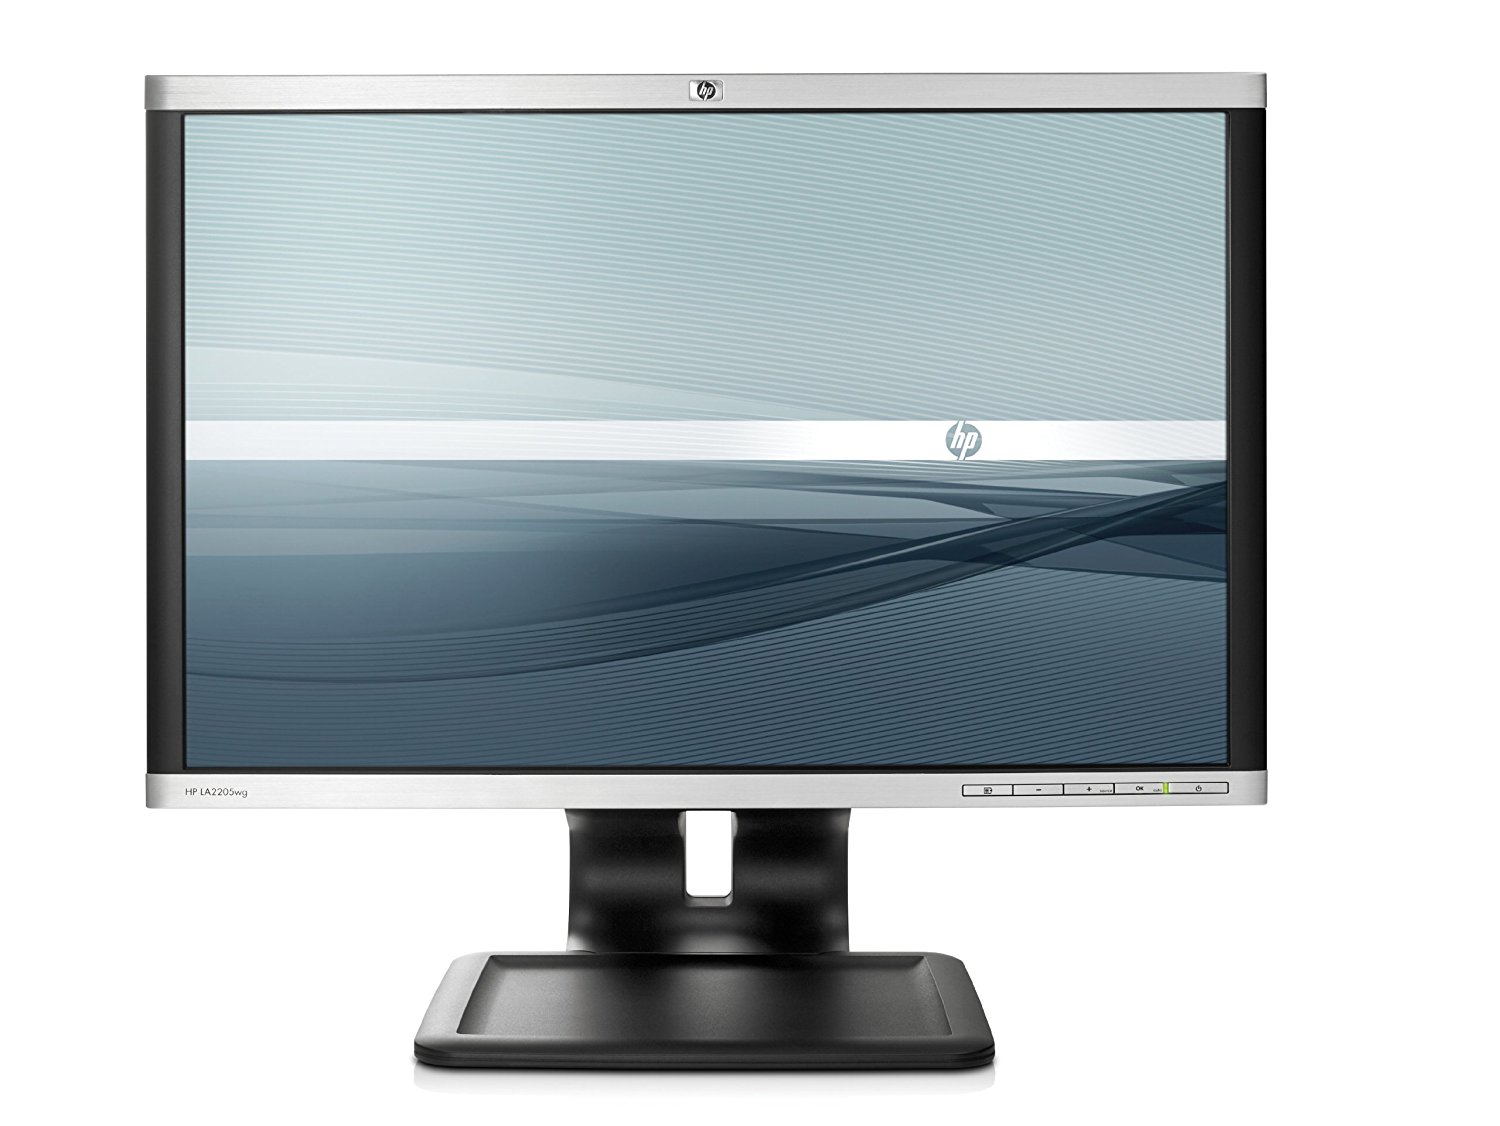 Monitor Refurbished HP LA2205wg, 22 Inch LCD, 1680 x 1050, VGA, DVI, Display Port, USB